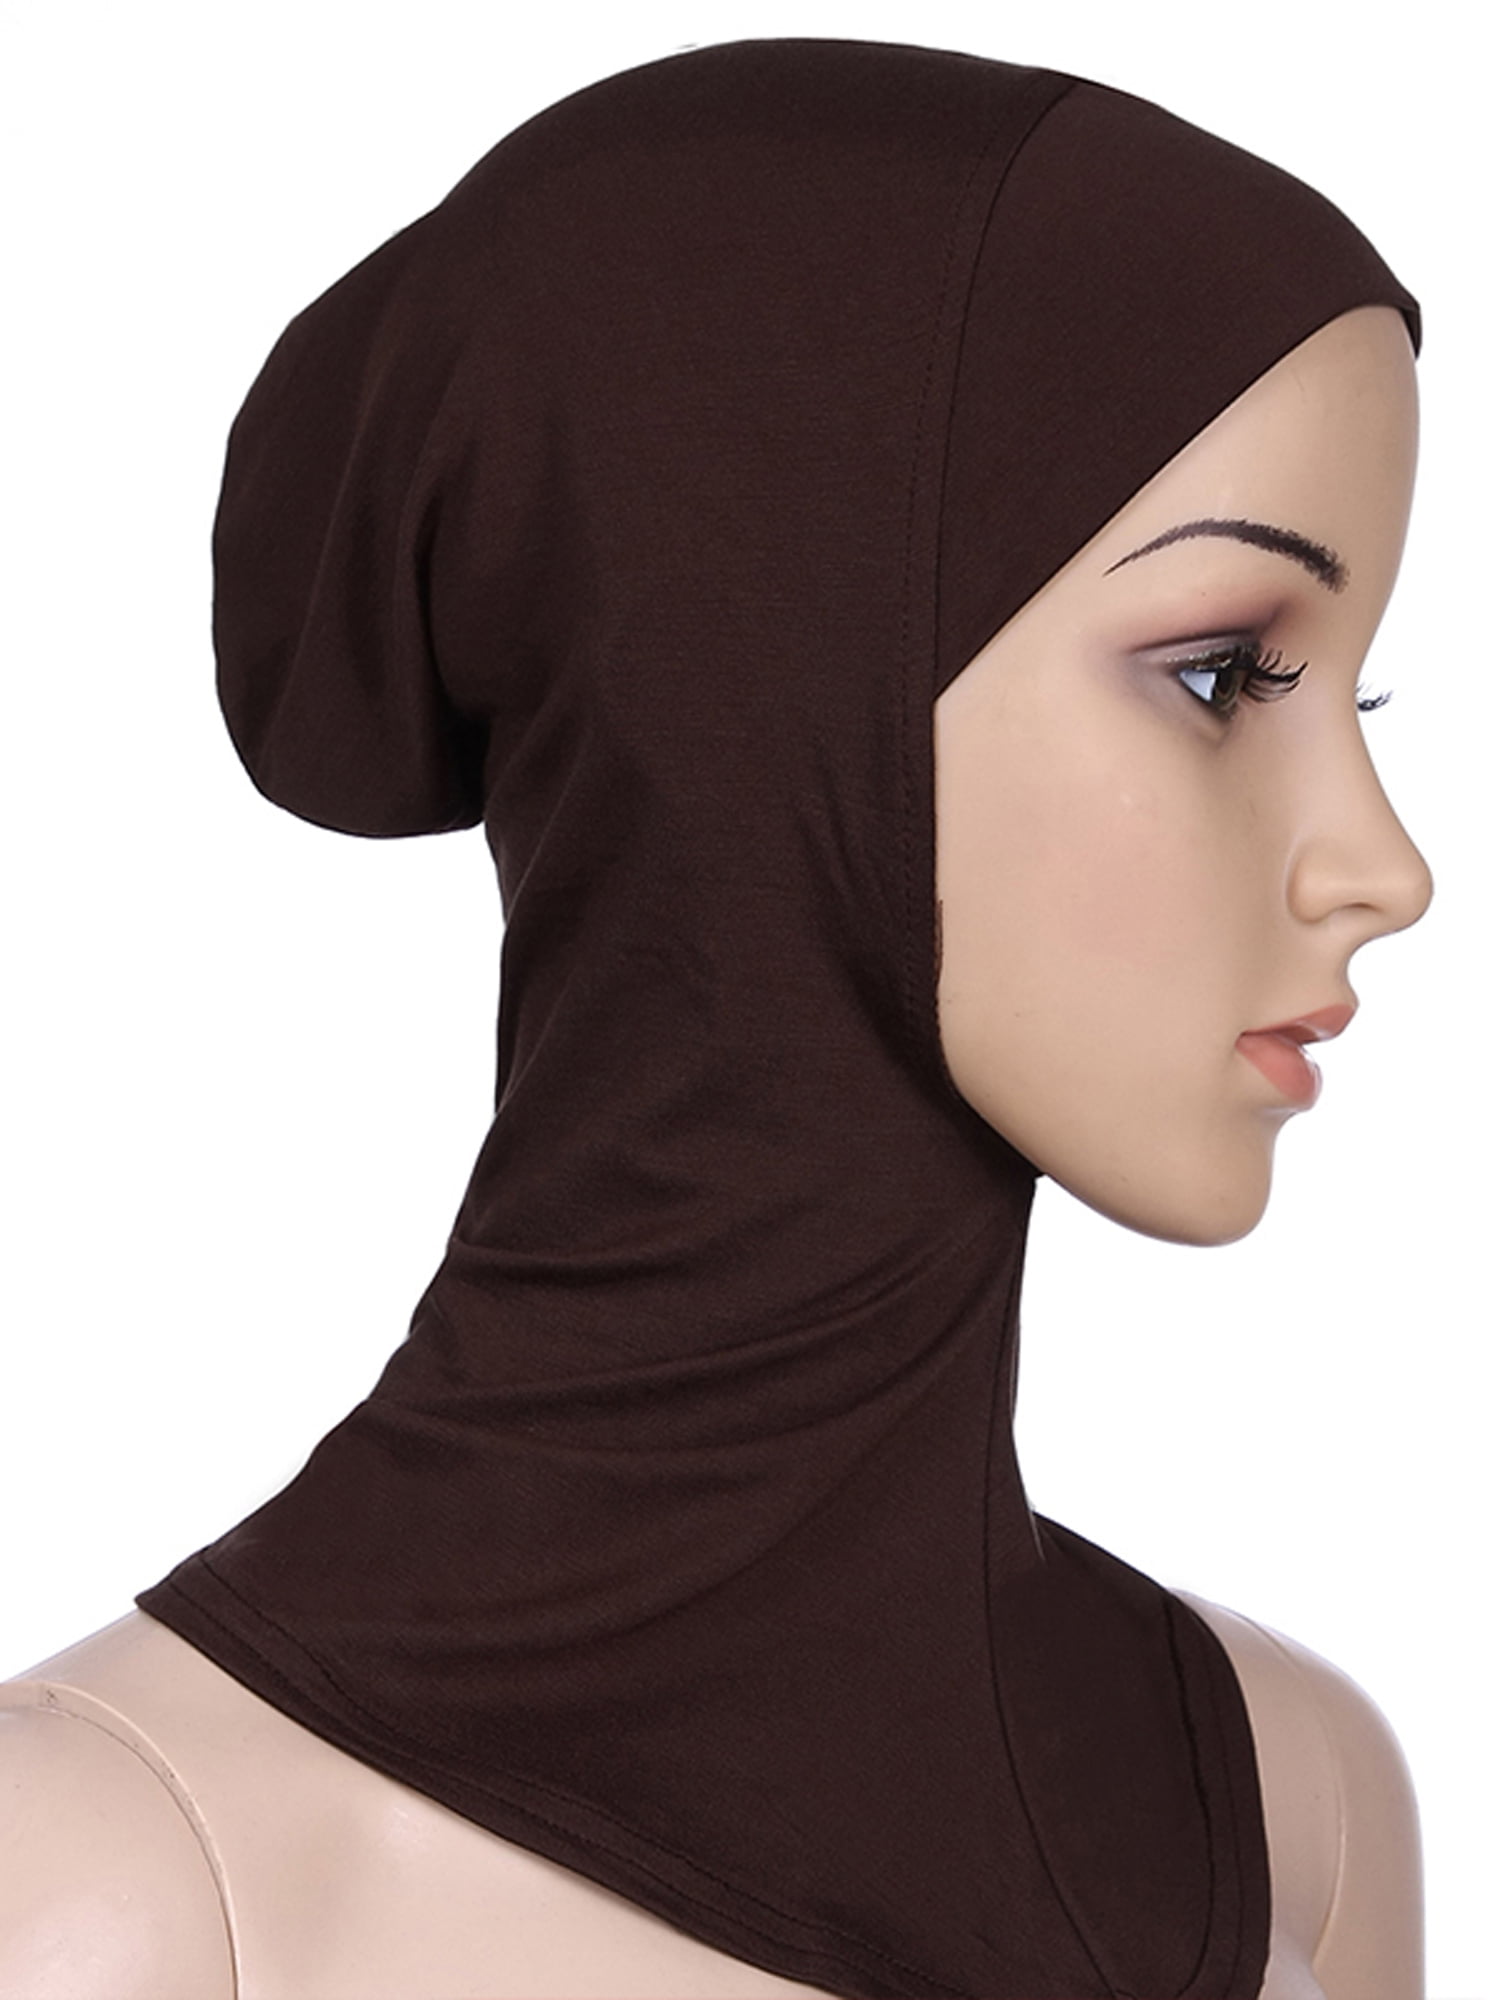 Womens Islamic Muslim Shiny Under Scarf Cap Bonnet Ninja Hijab Neck Cover Hats